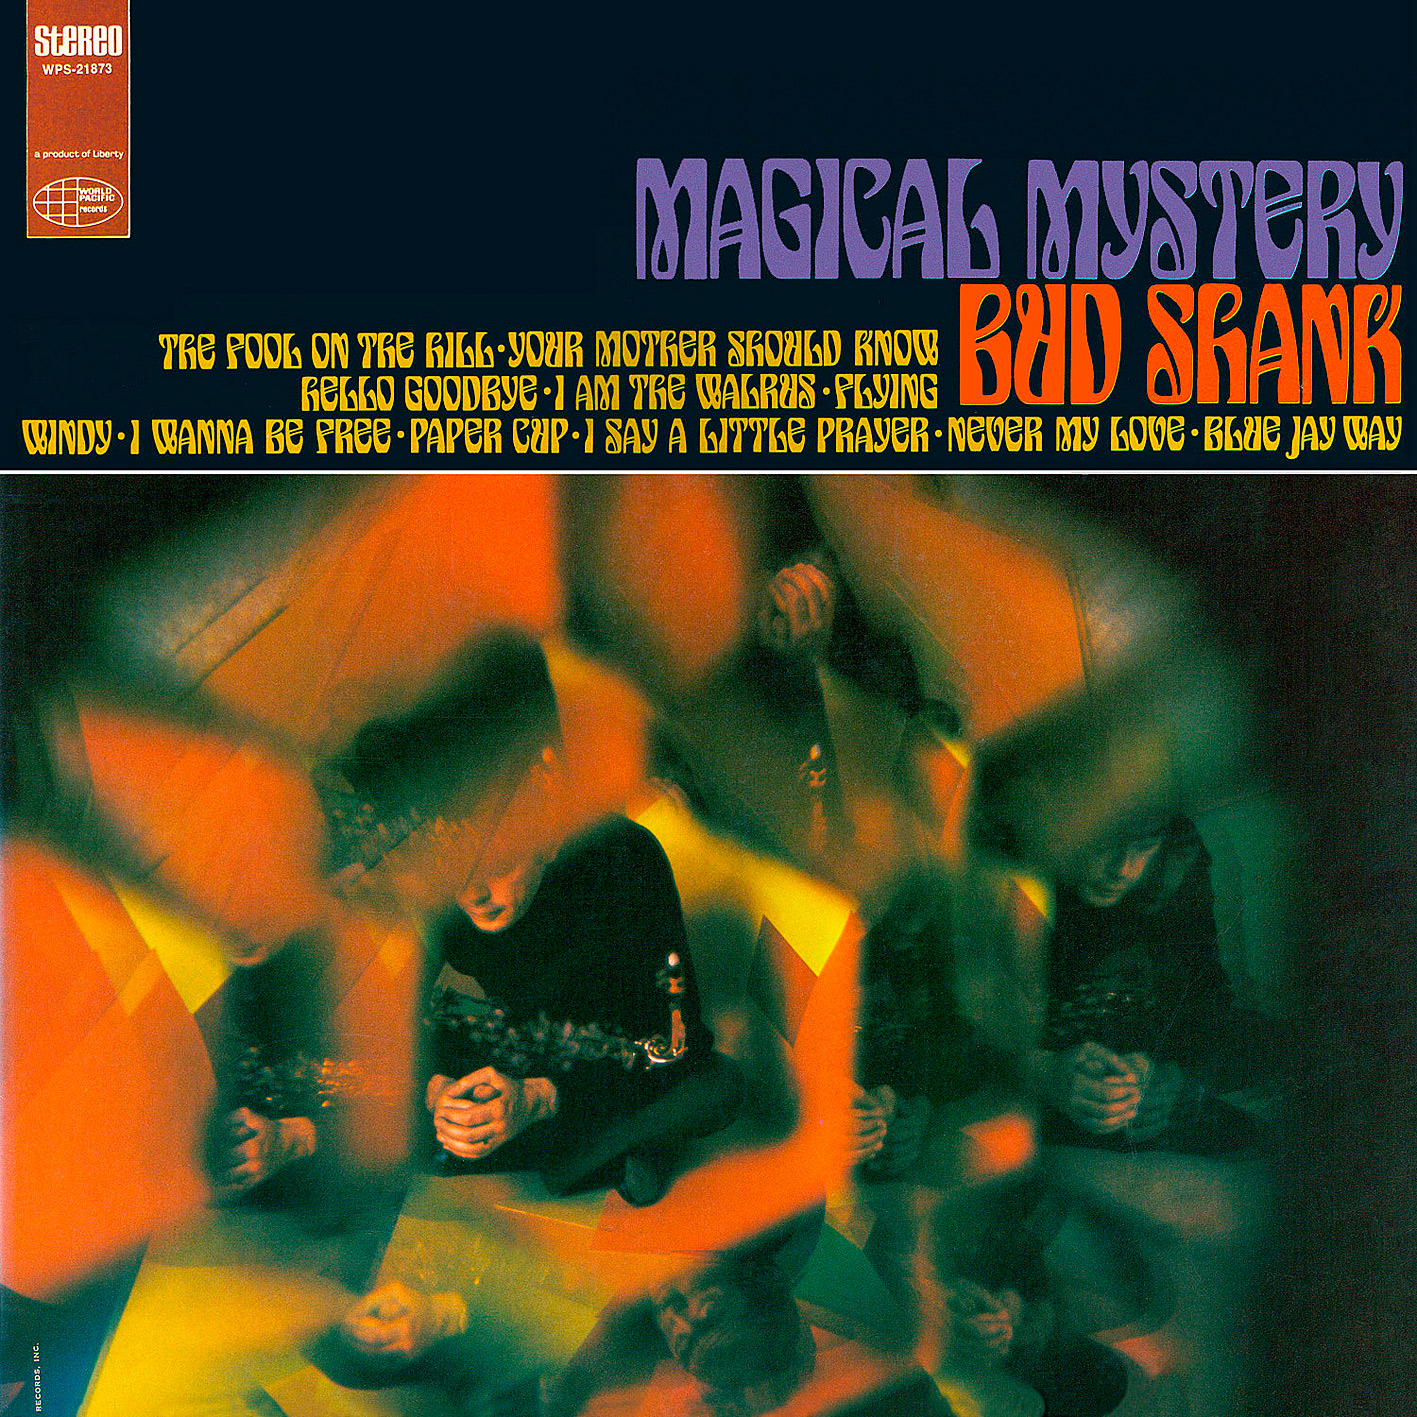 Bud Shank - Magical Mystery (1968/2015) [HDTracks FLAC 24bit/96kHz]